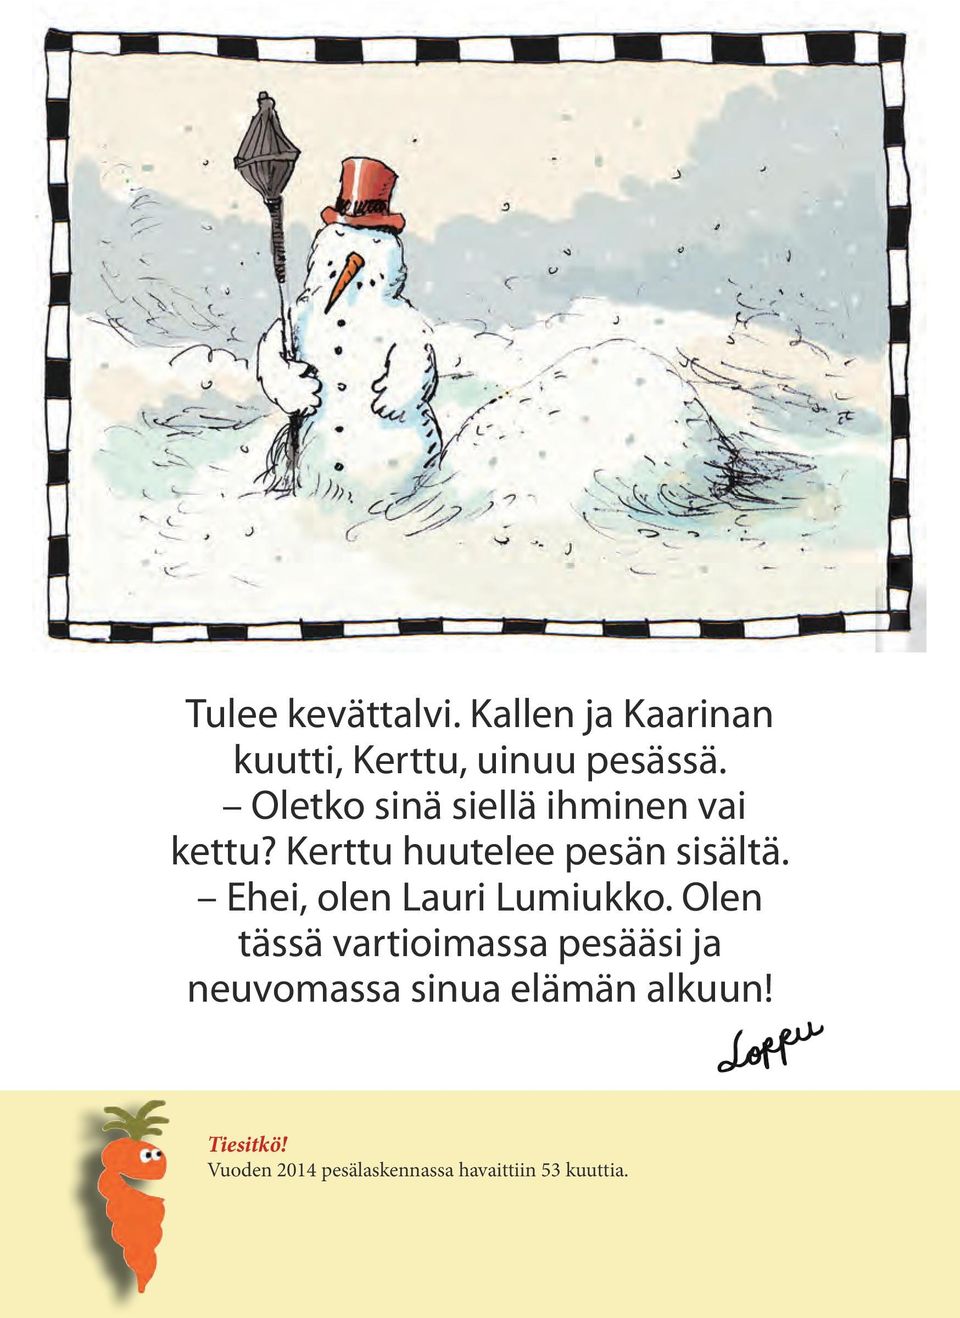 Ehei, olen Lauri Lumiukko.